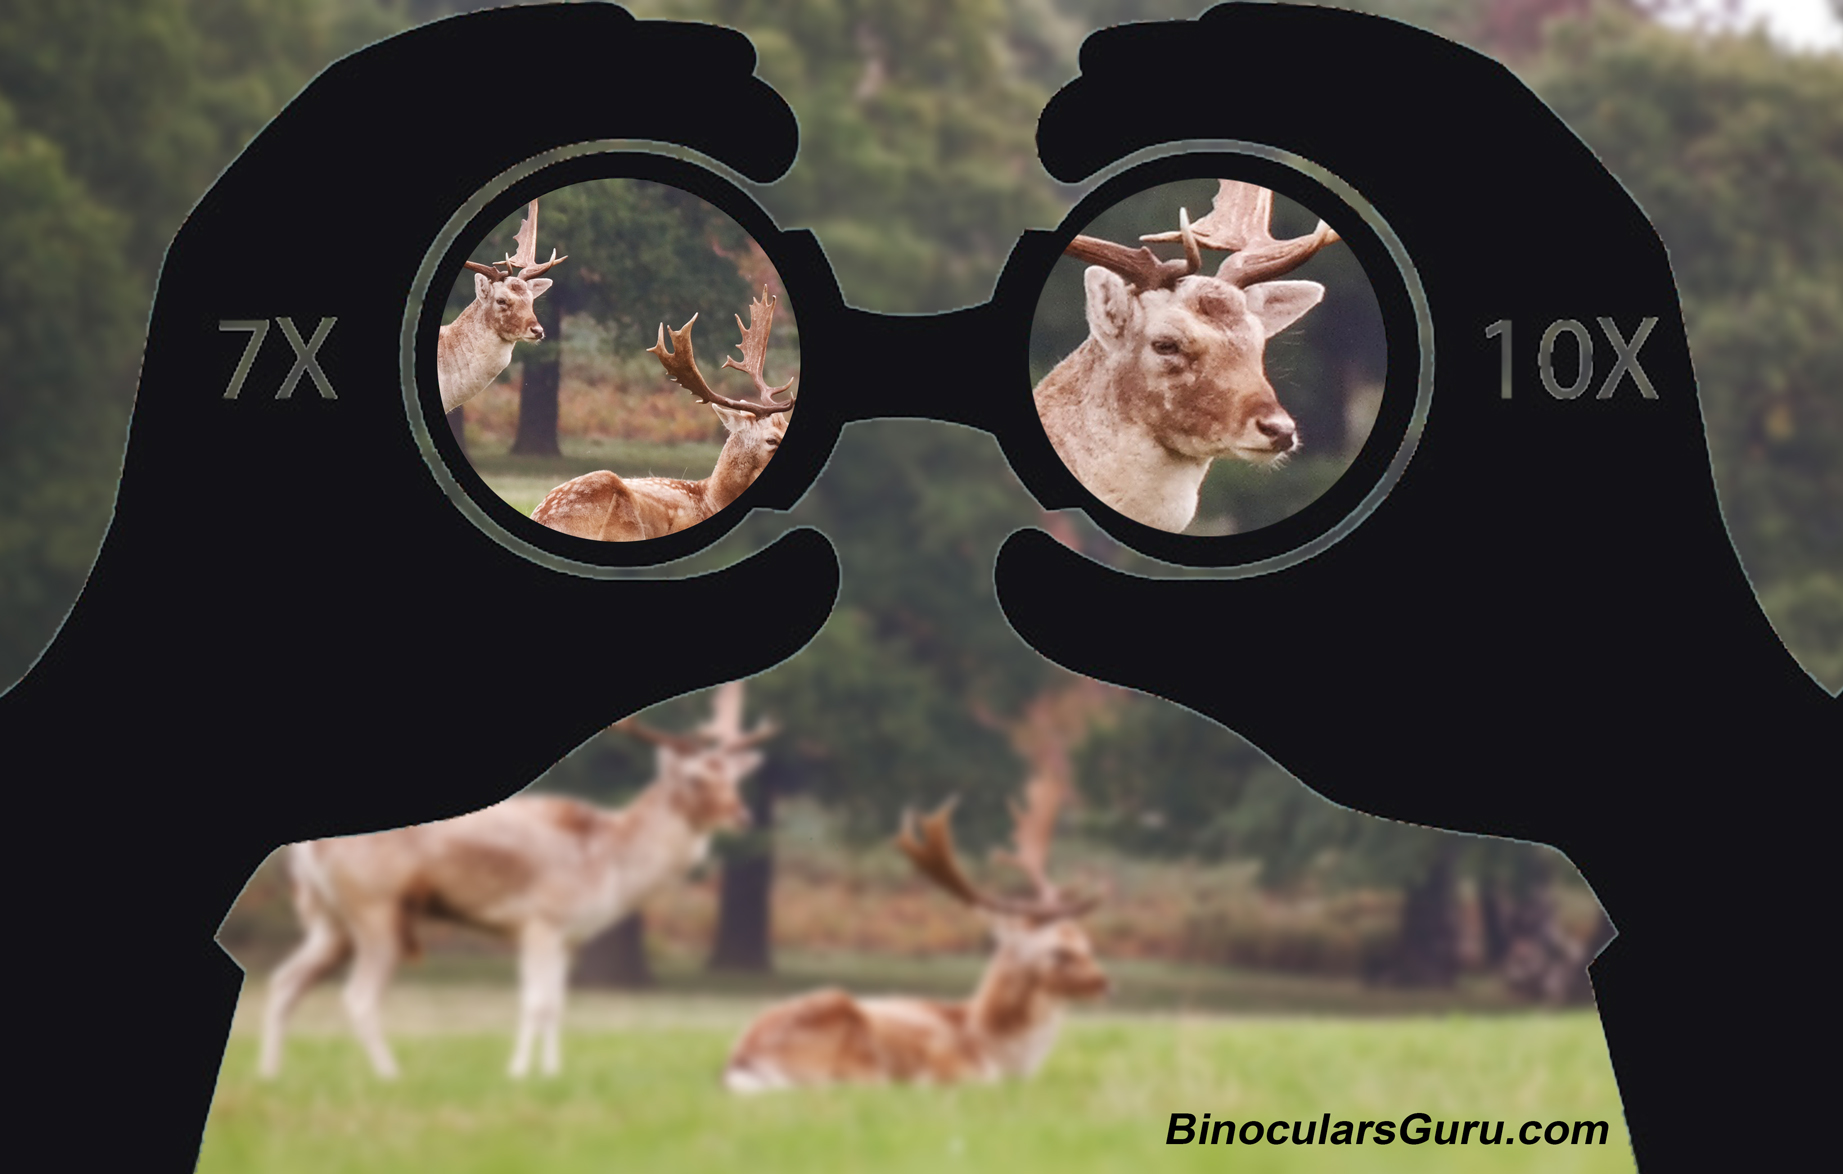 magnification of binoculars